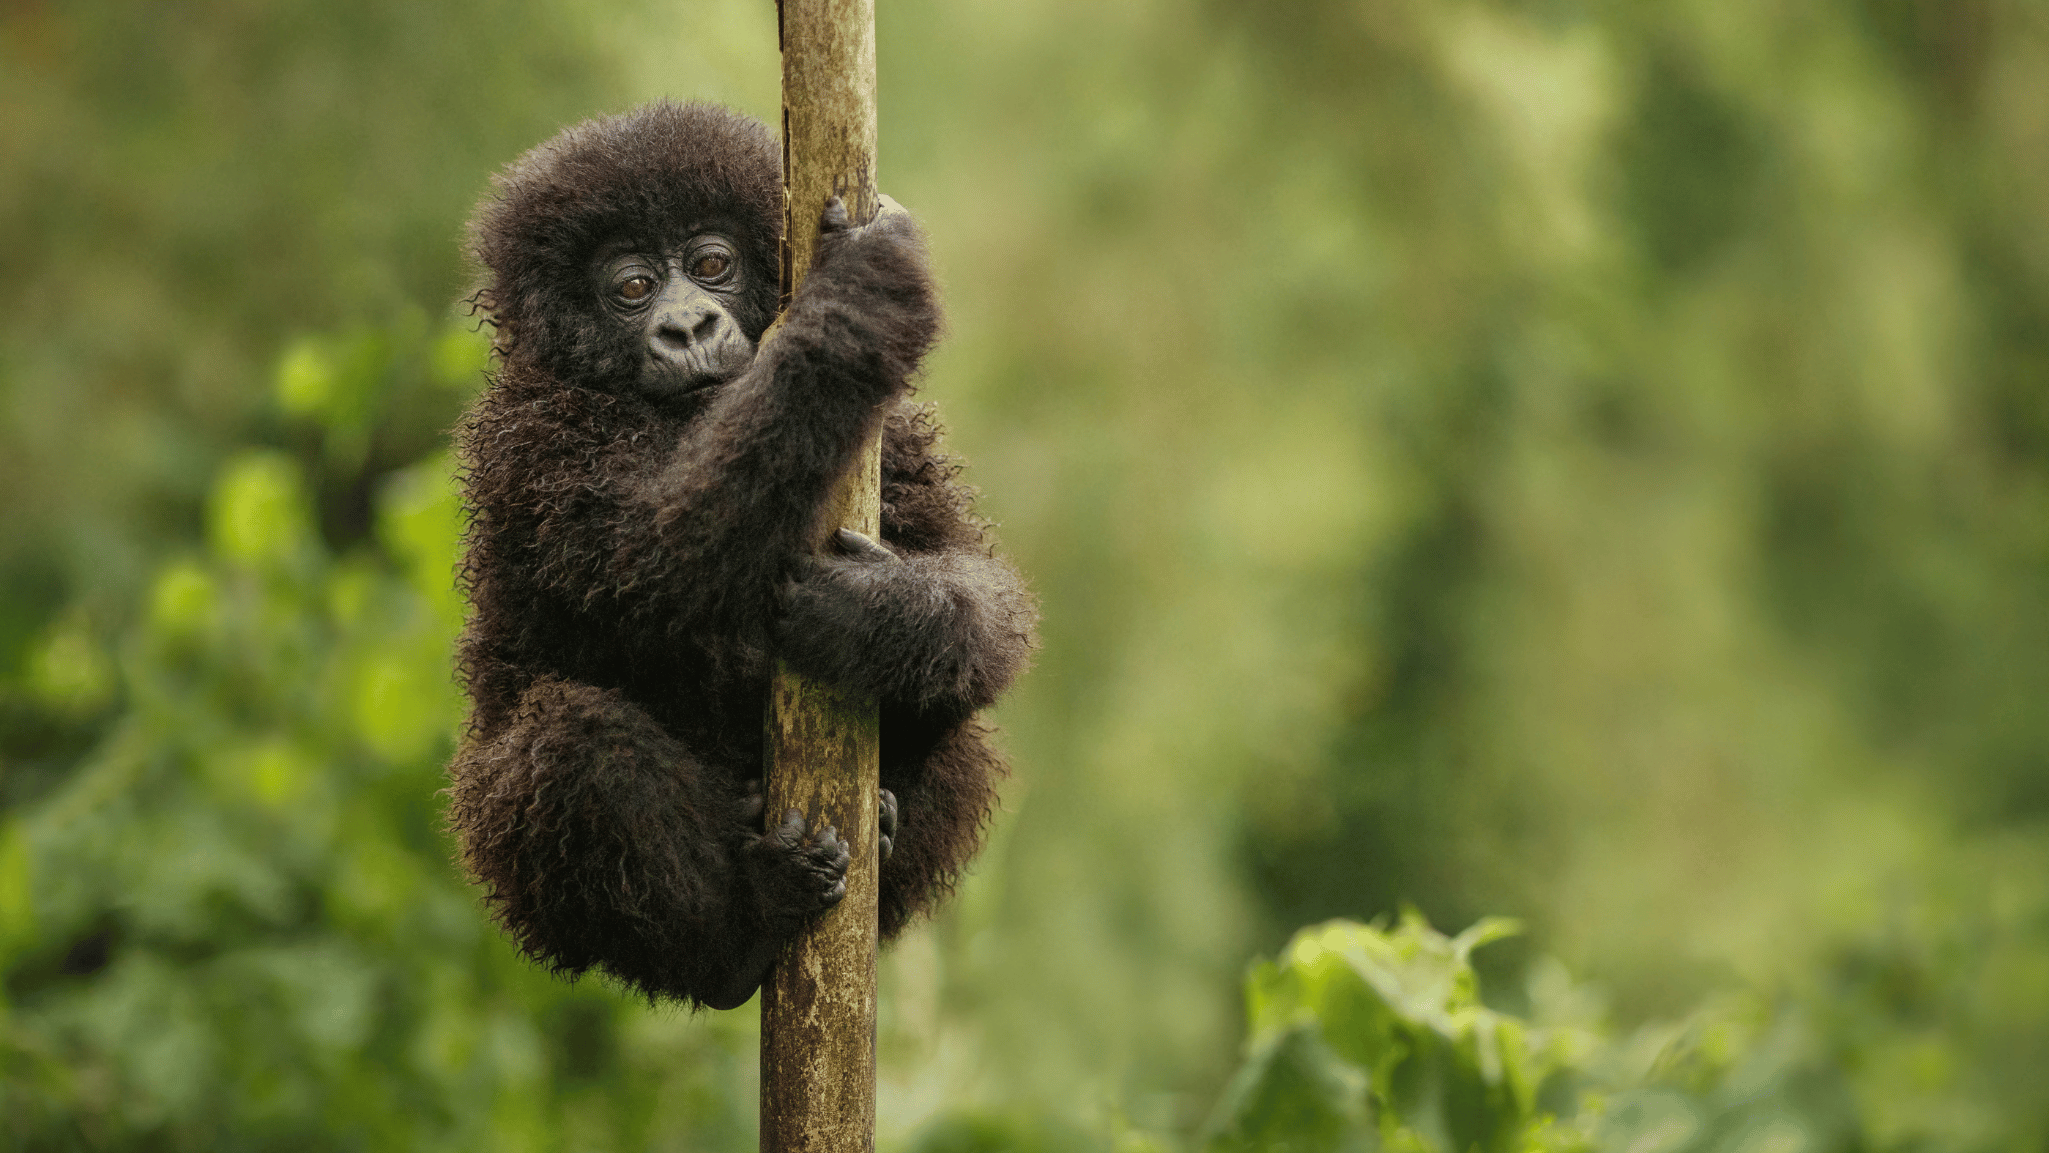 Trekking with the Gorillas in Uganda